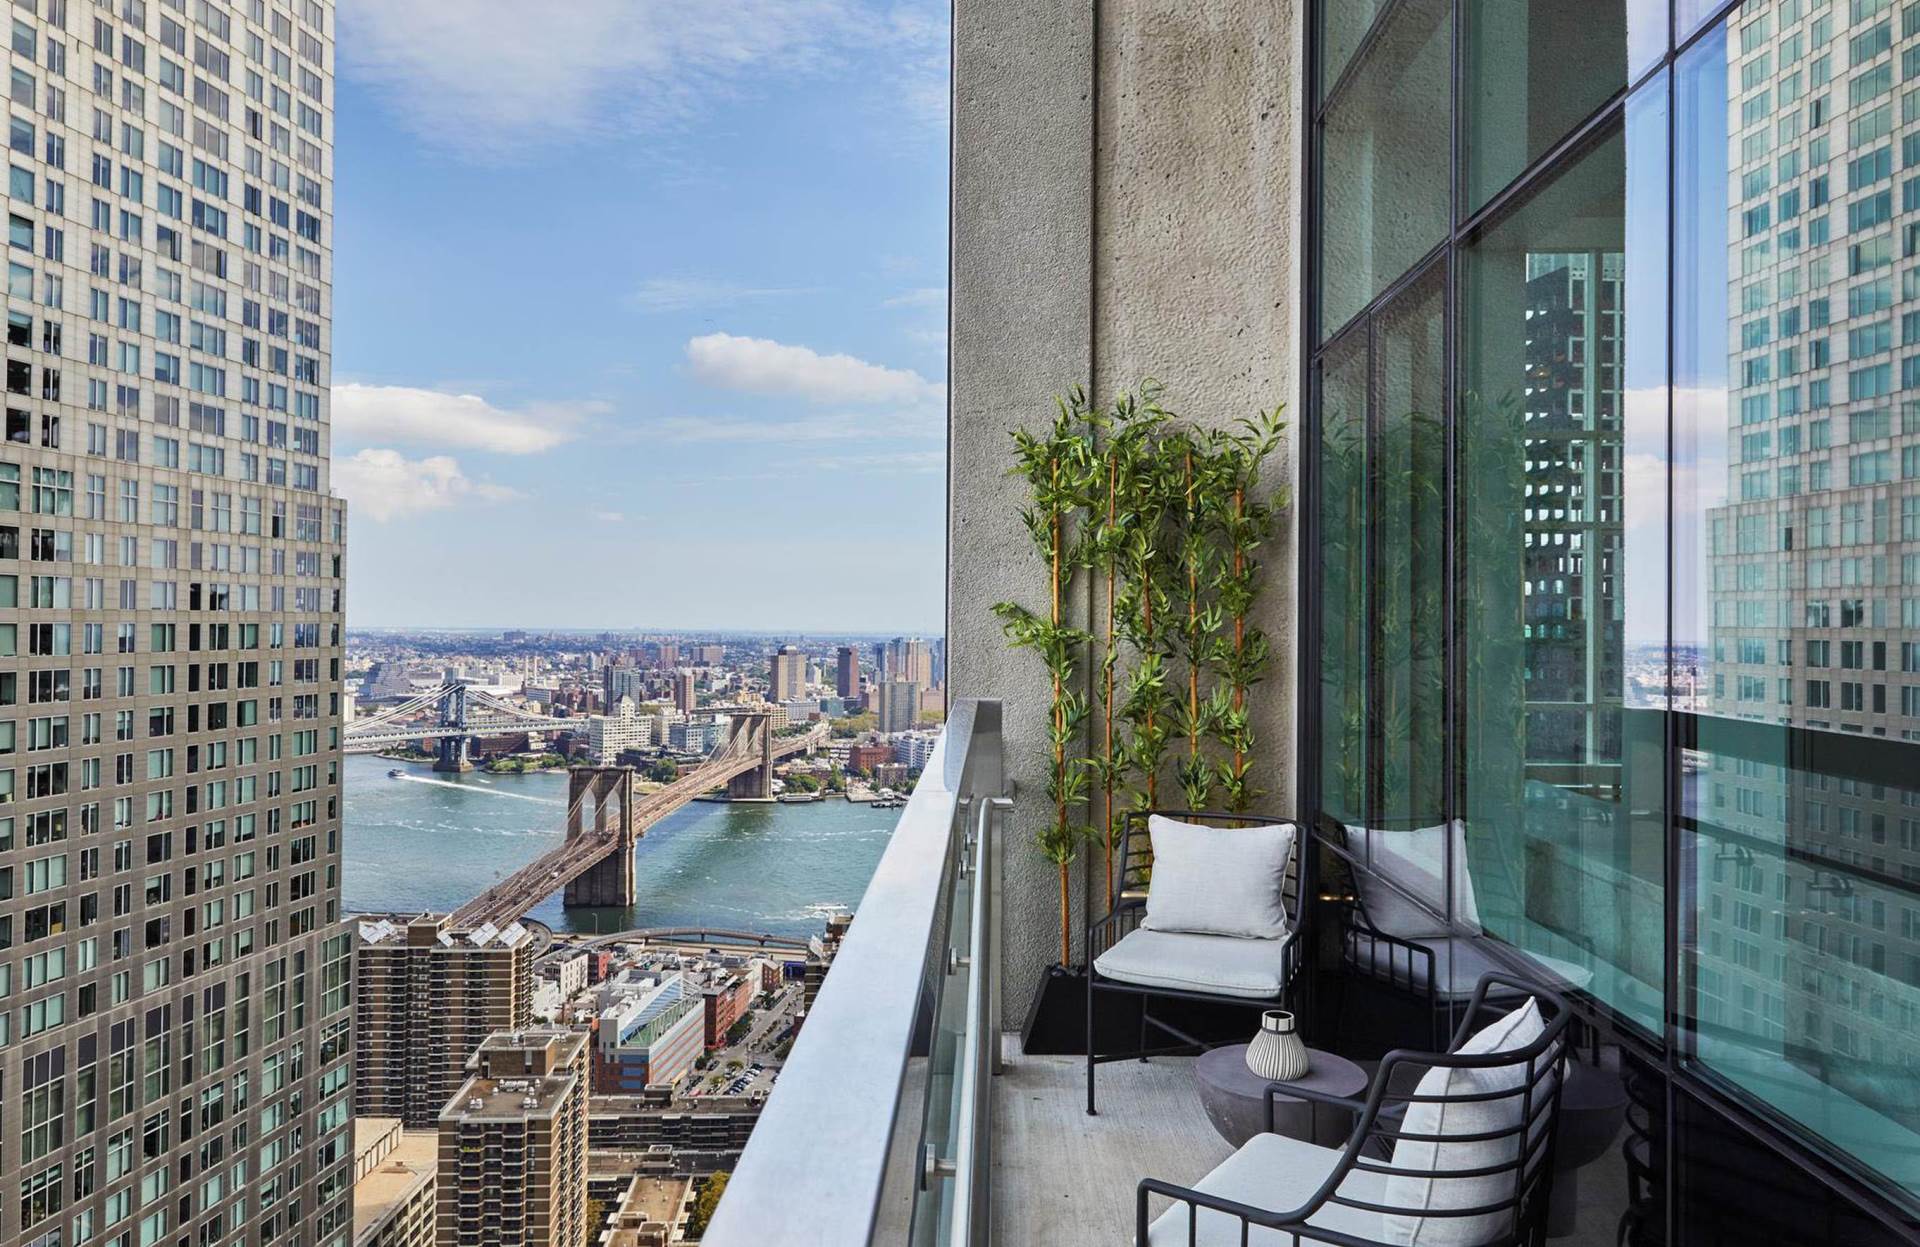 Chris Hemsworth i Elsa Pataky bacili su oko na stylish njujorški stan